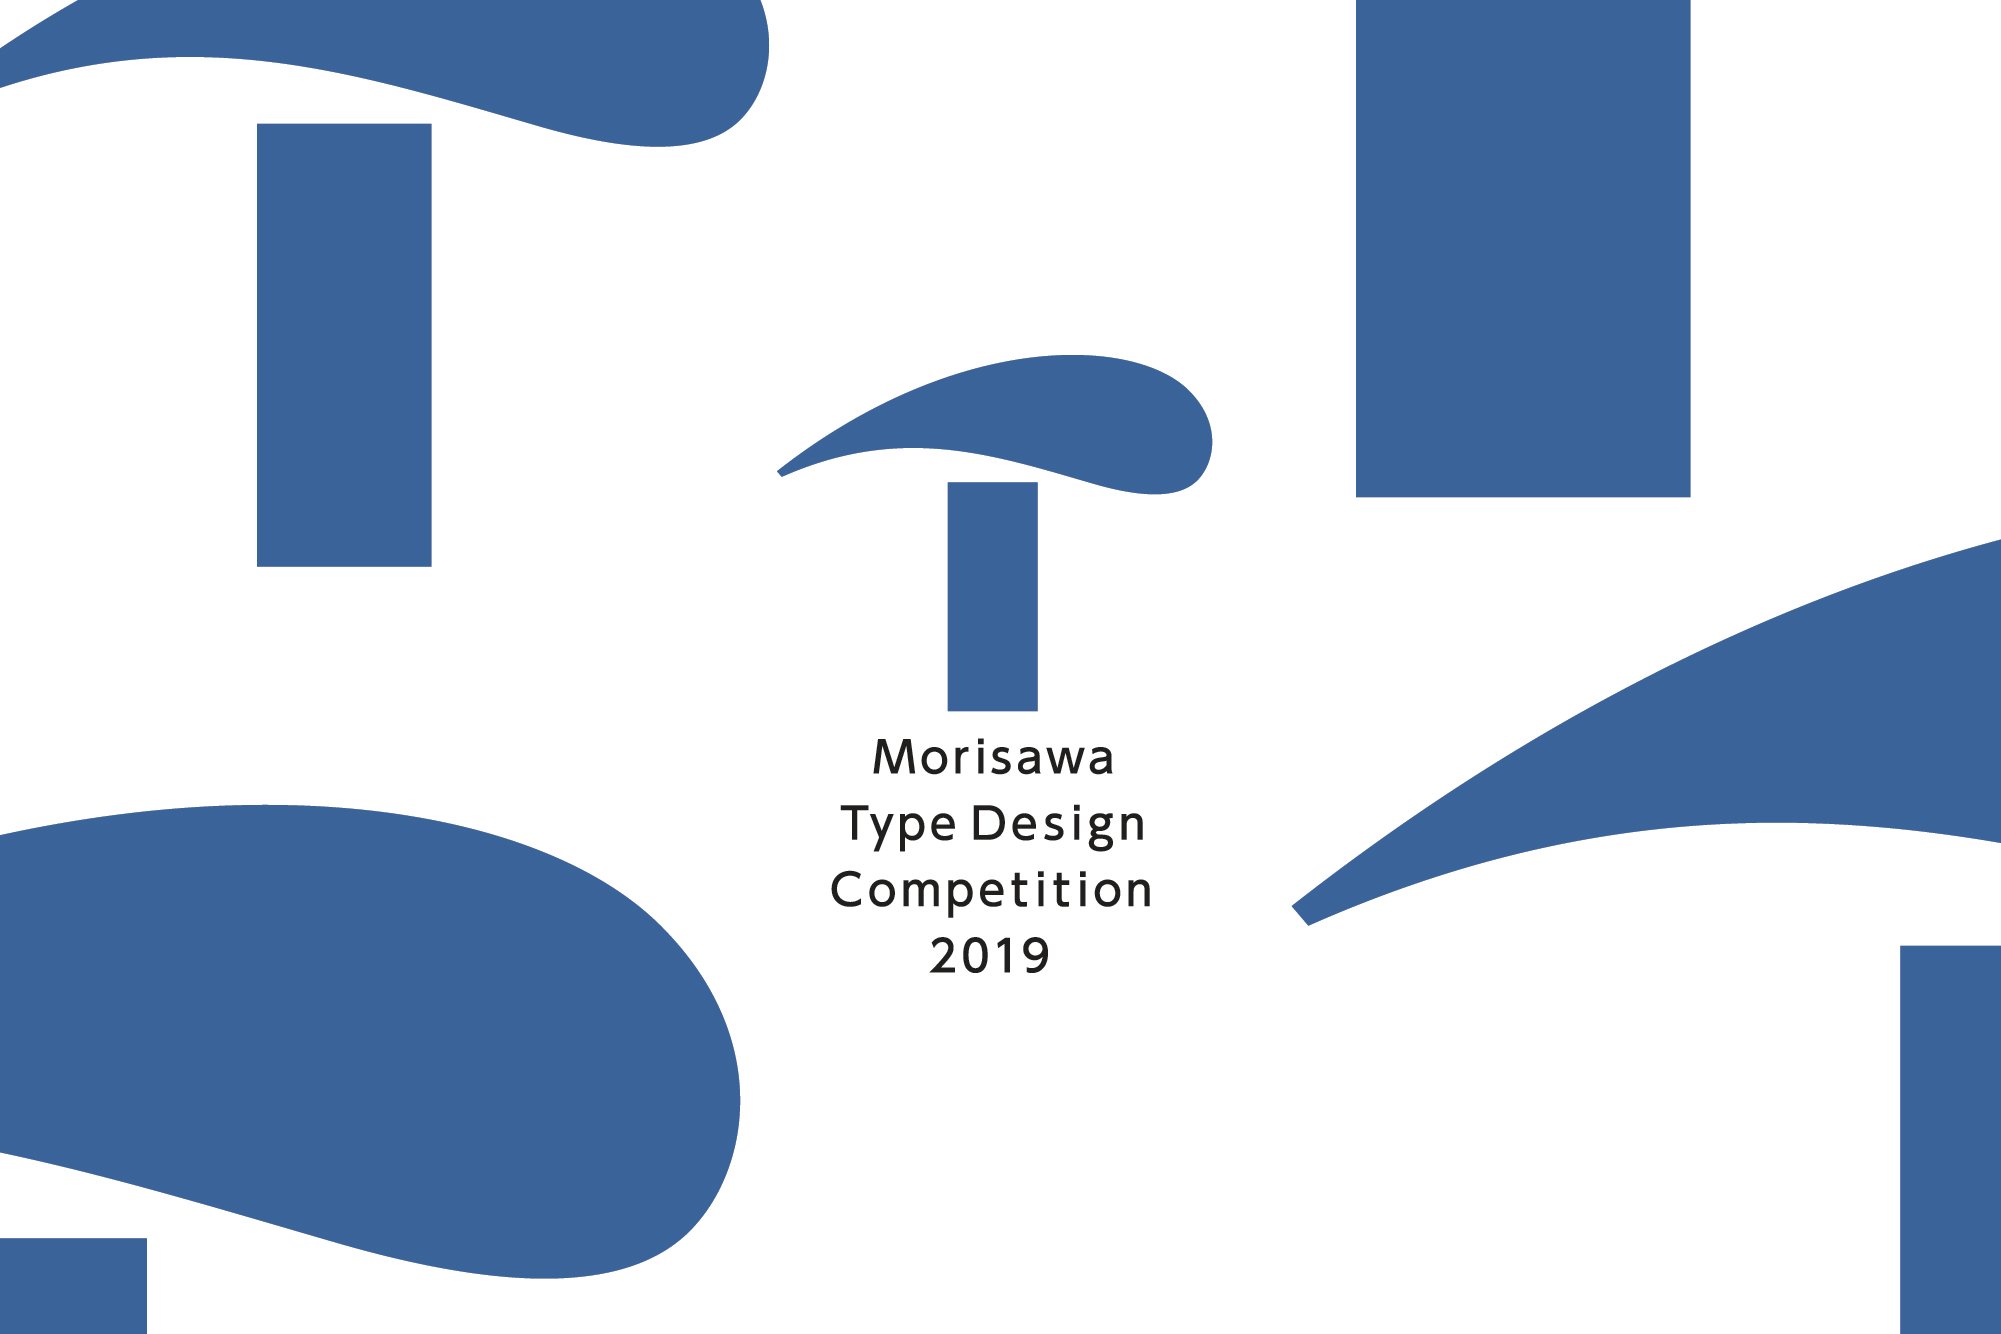 Morisawa Type Design Competition 2019